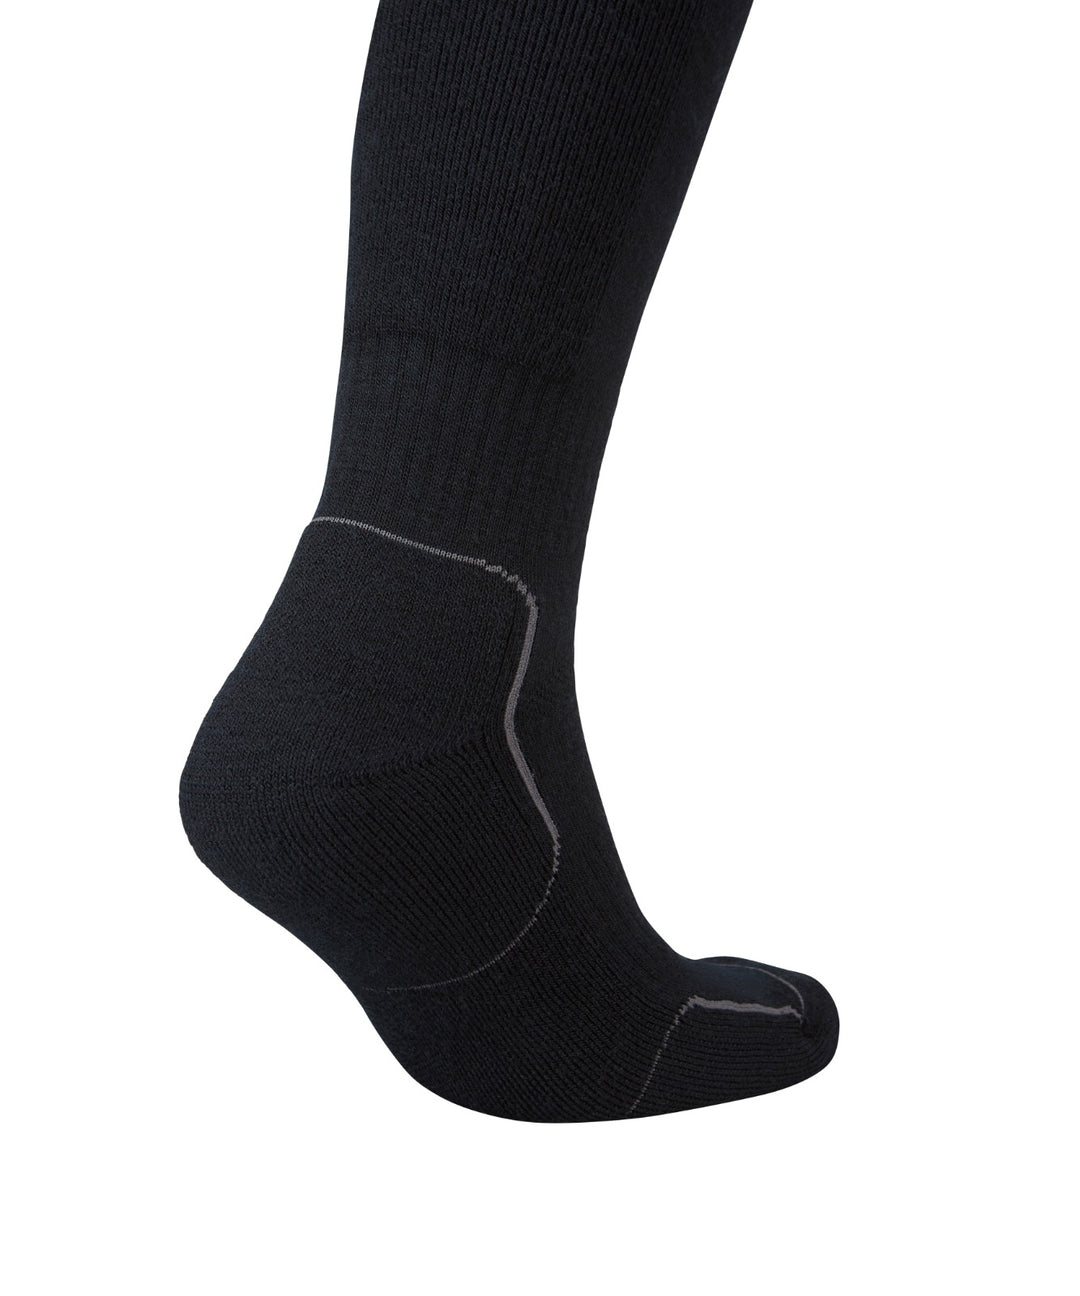 Black Trooper Sock heel view